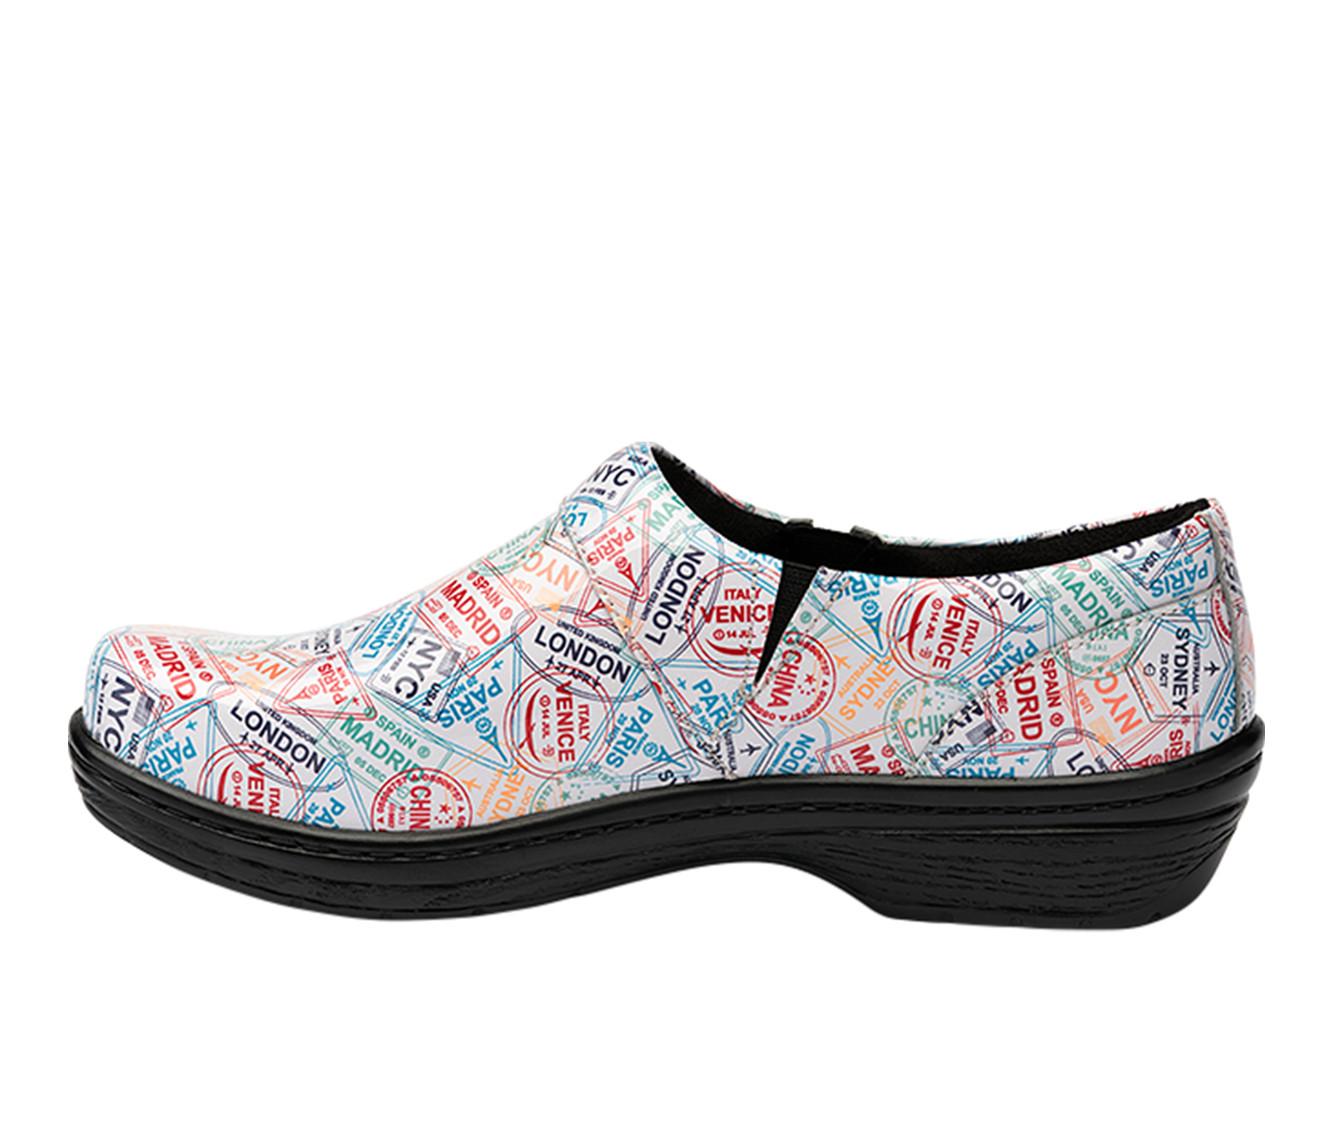 Women's KLOGS Footwear Mission Print Slip Resistant Shoes